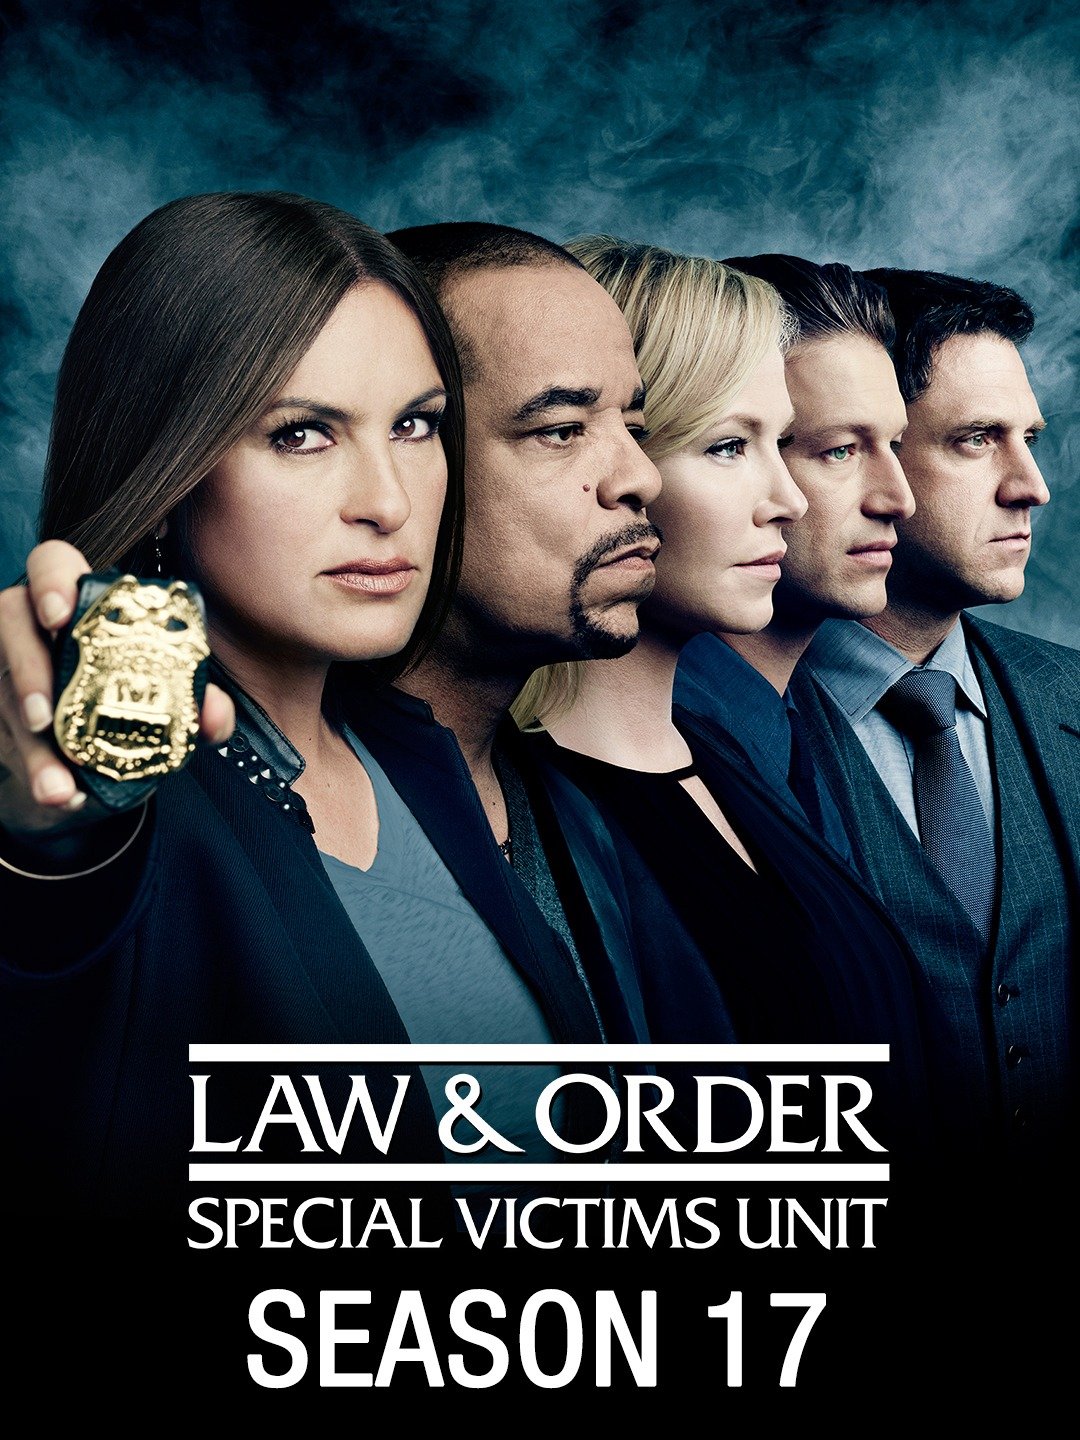 law and order svu season 6 download torrent